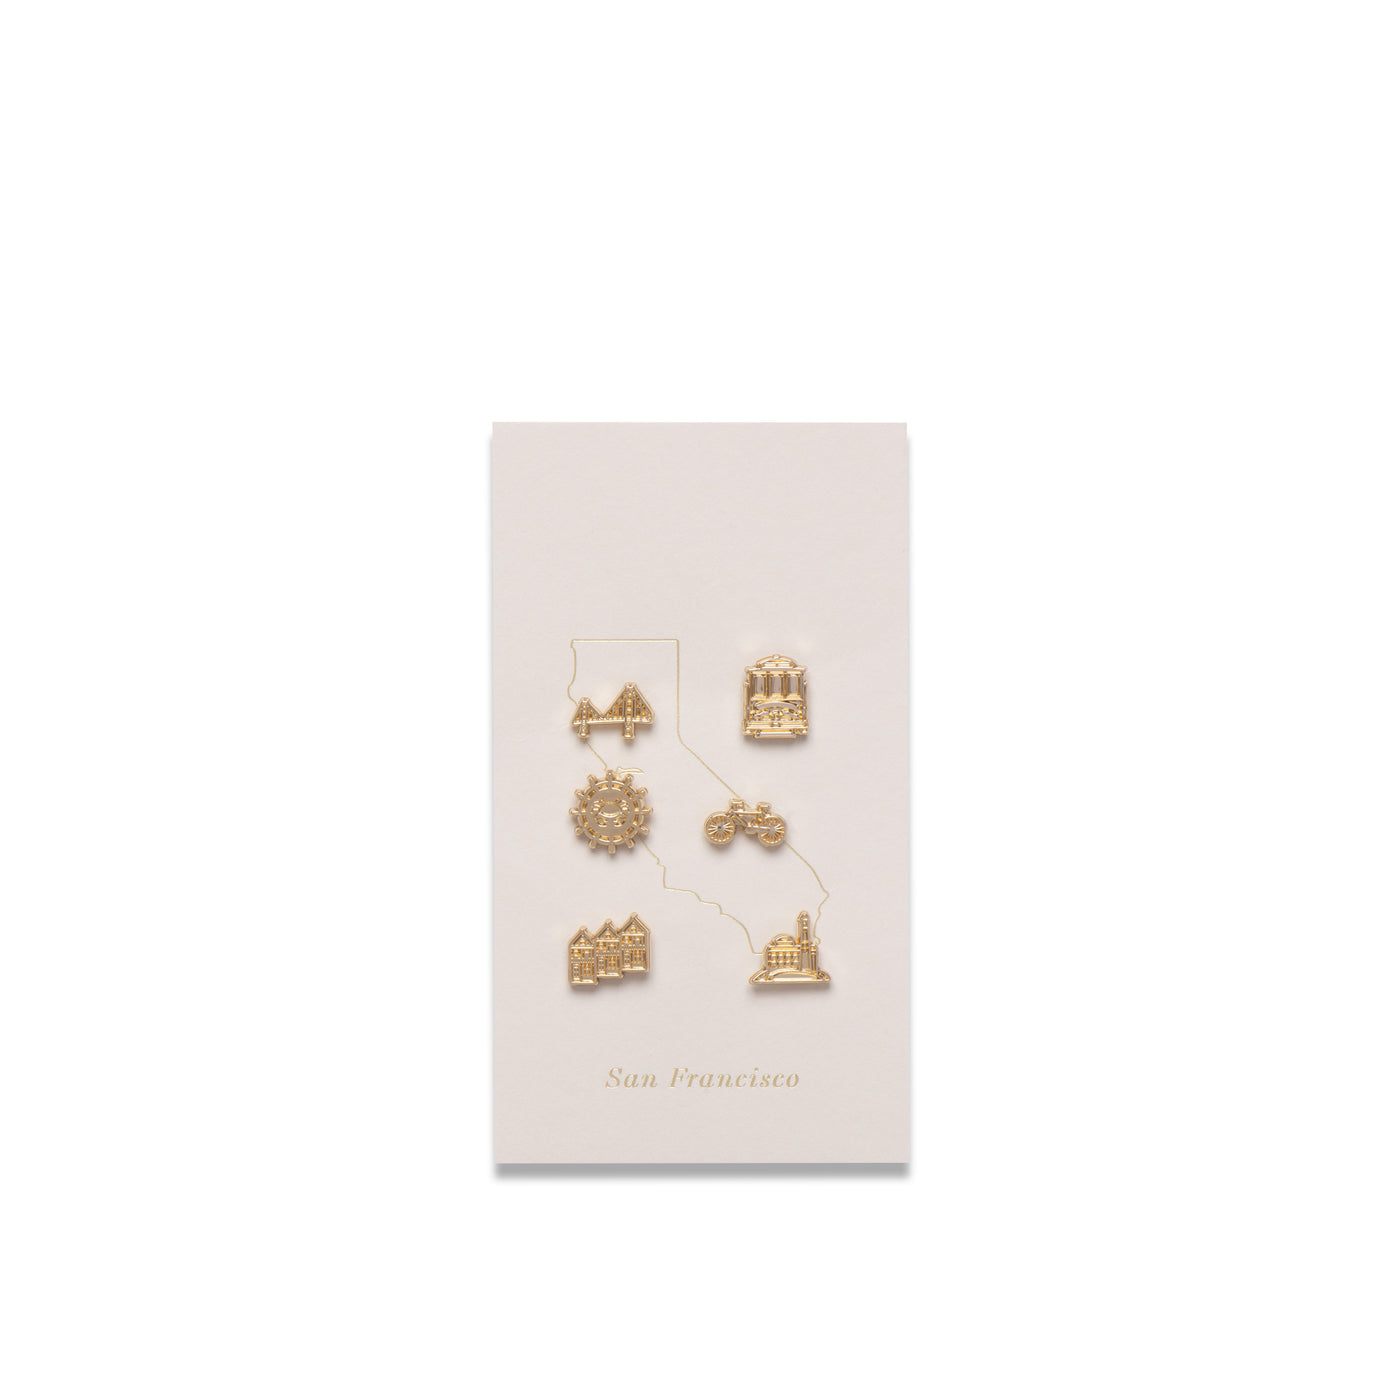 Lark and Ives / Lapel Pins / Pushboard Pins / Gold Pin / Gold Accessories / Set of 6 Pins / San Francisco Themed